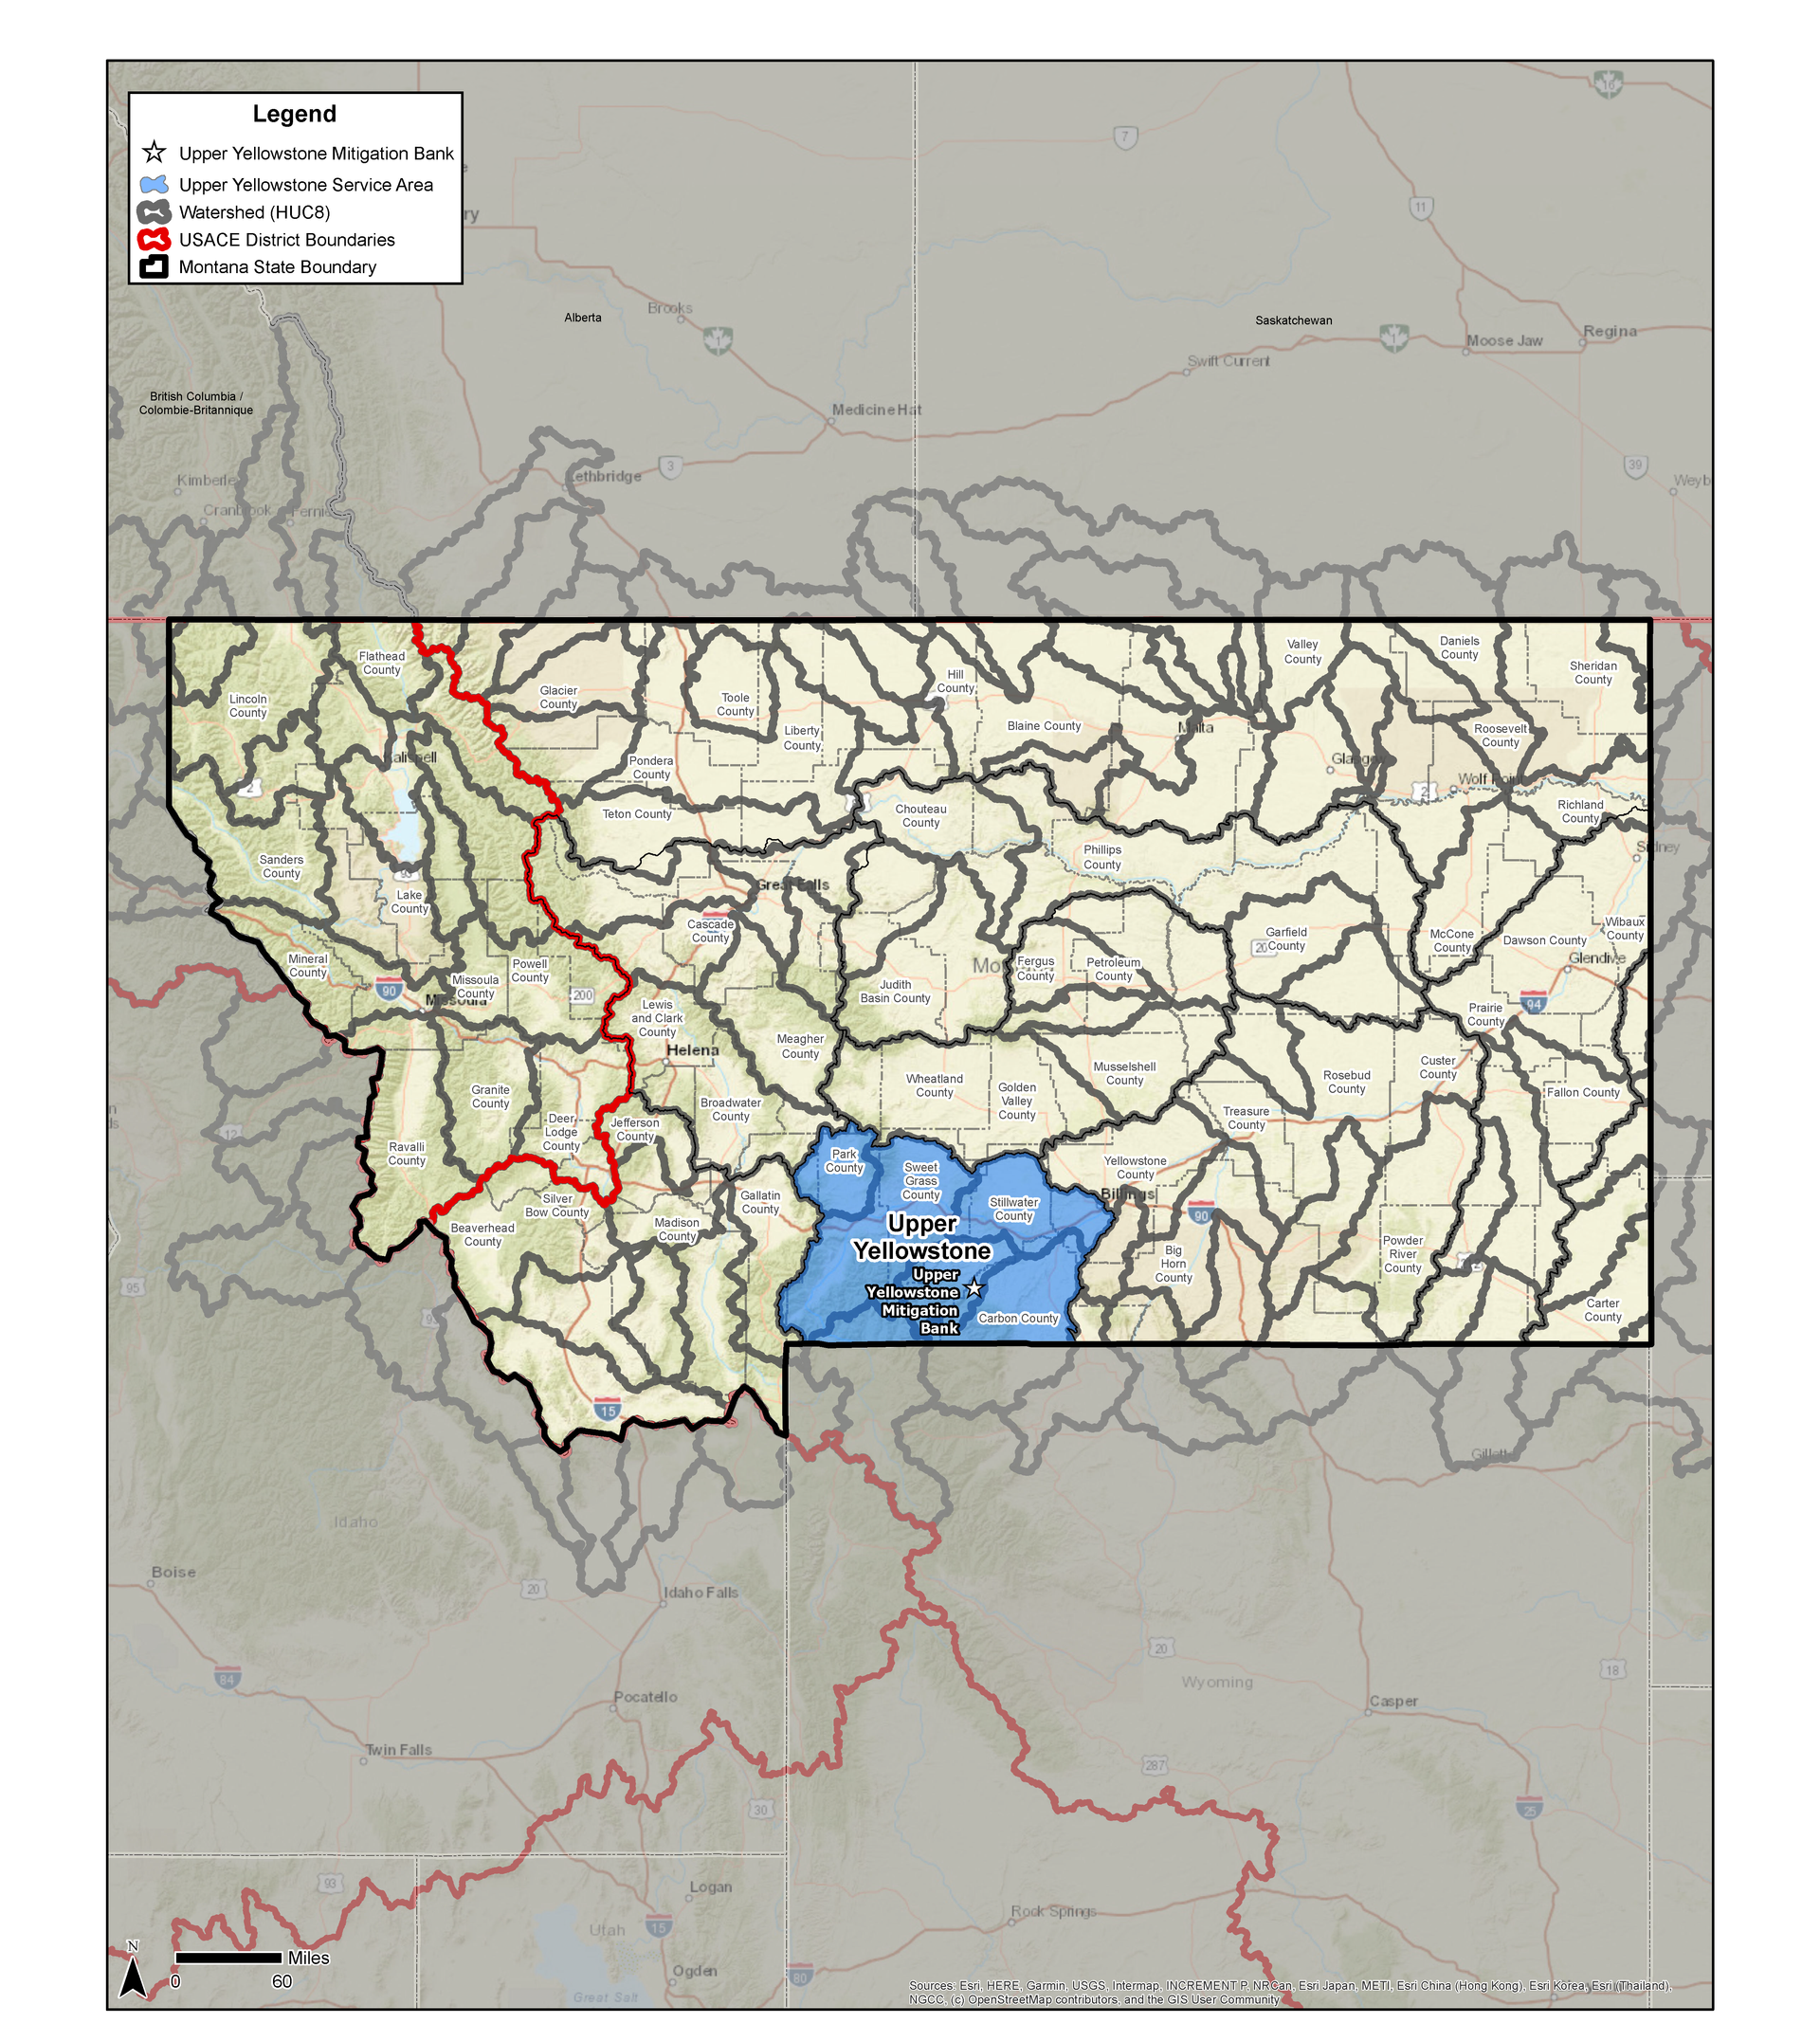 Upper Yellowstone Mitigation Bank